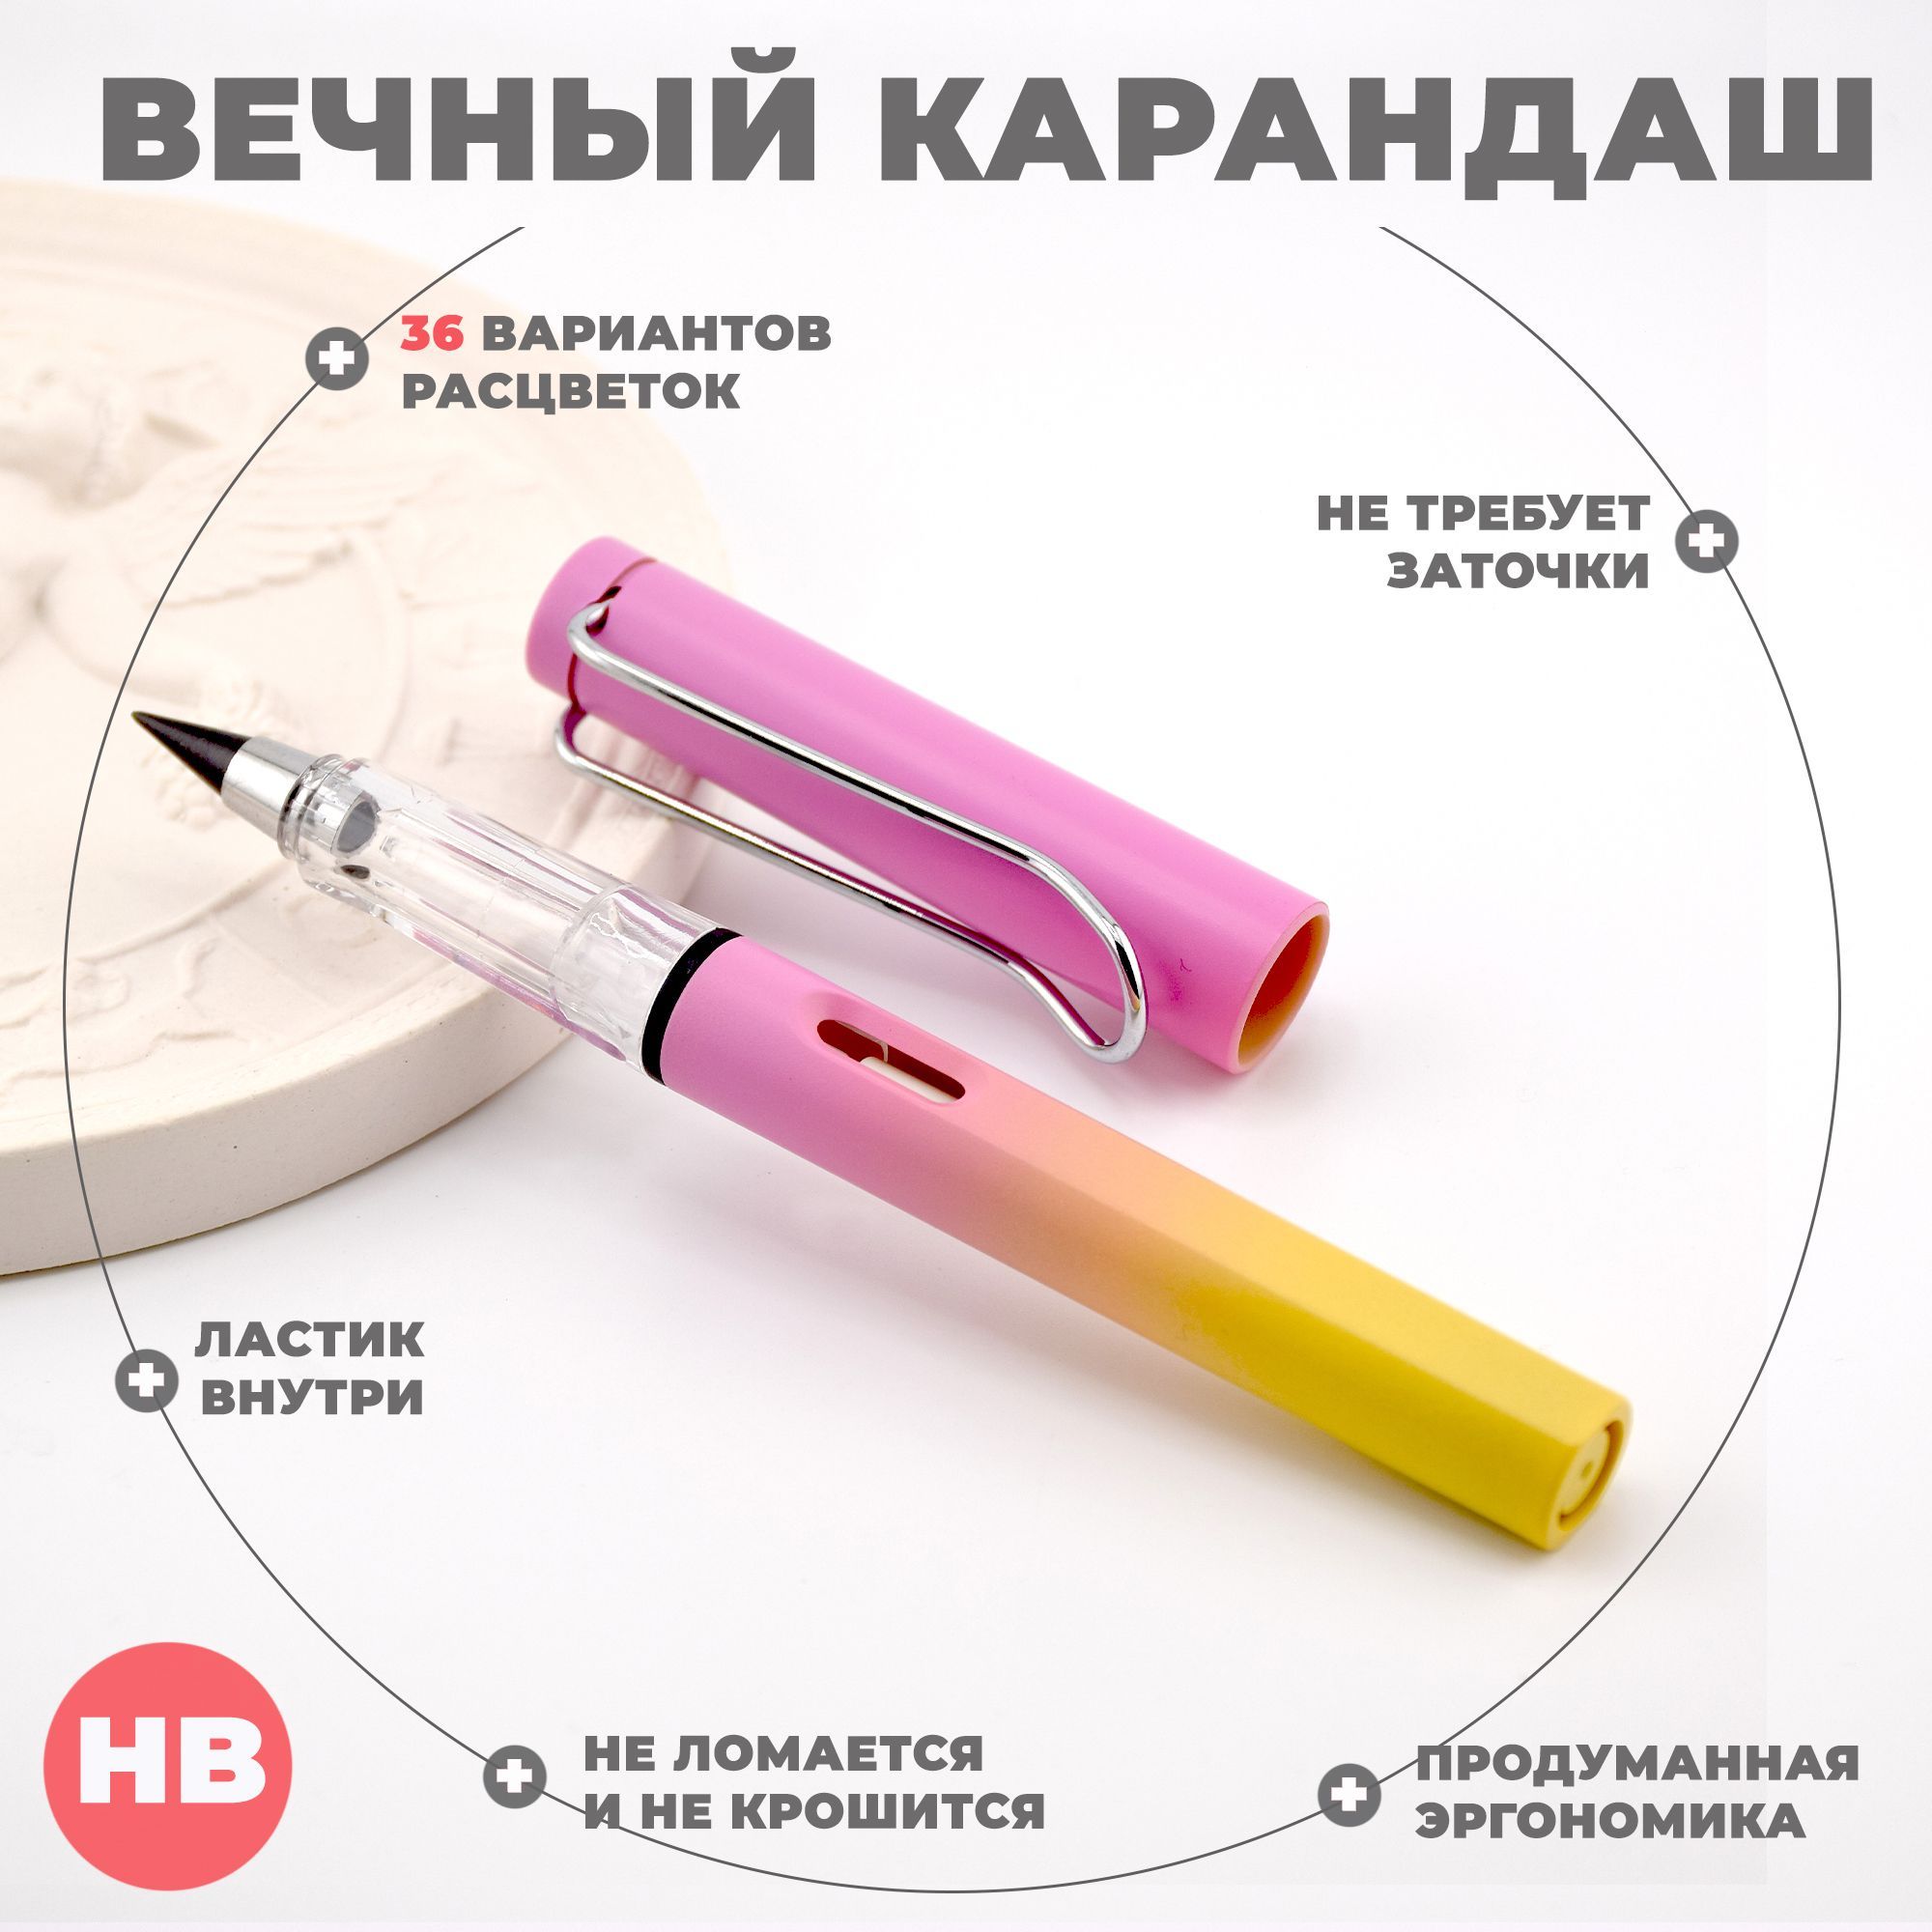 Вечный карандаш Aihao, HB, 0,5 мм, градиент розовый/желтый